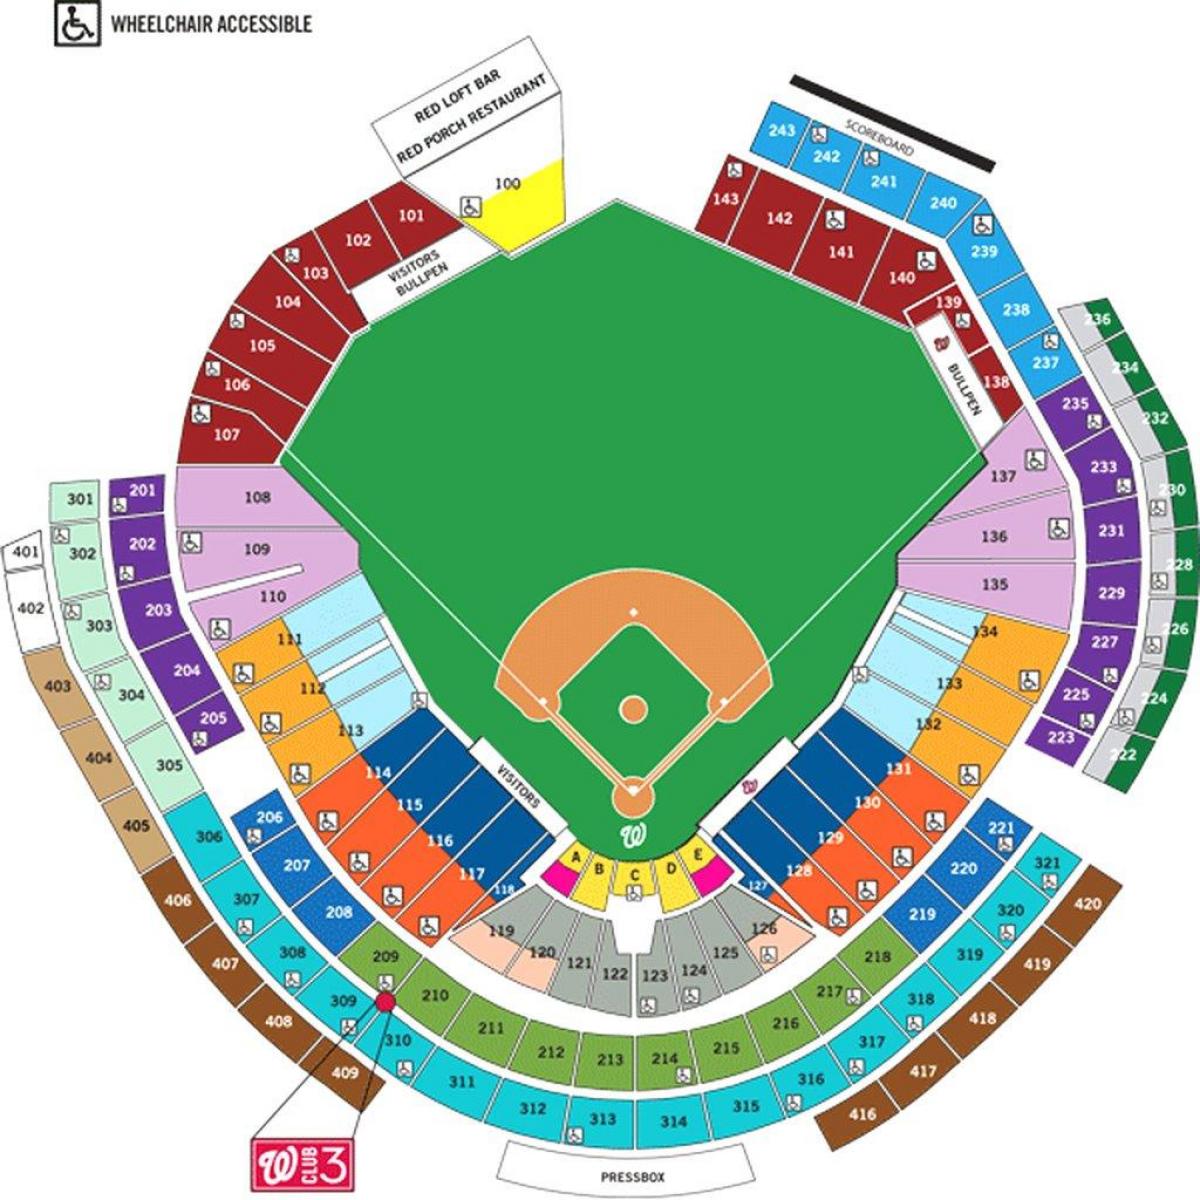 вашингтон државјани ballpark мапа